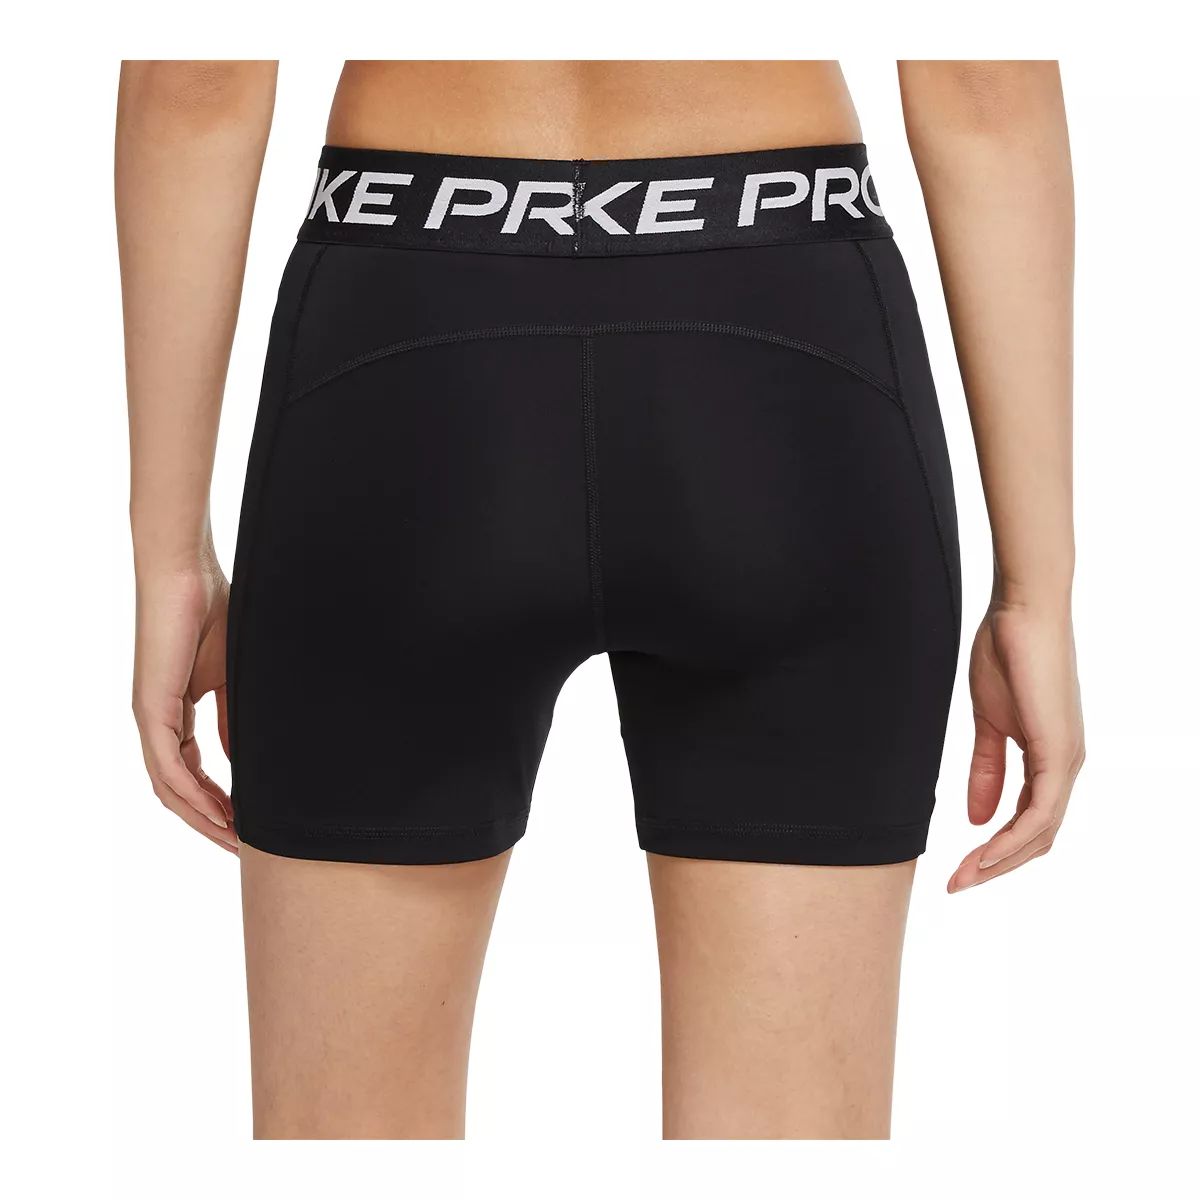  Nike Pro Spandex Shorts Women